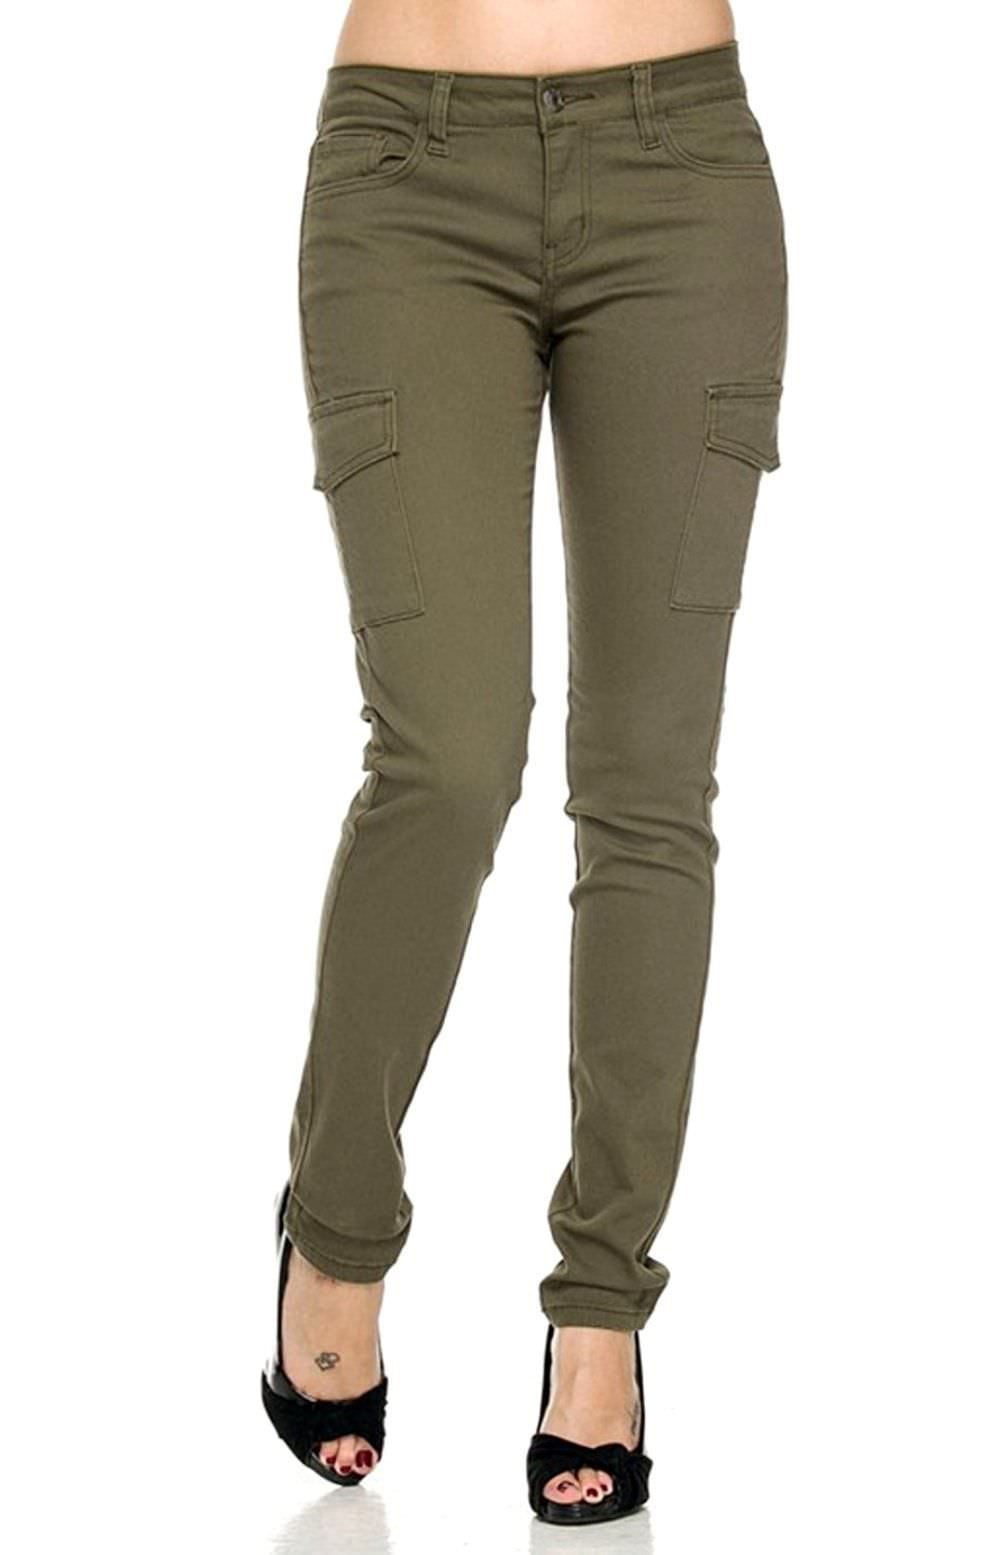 WAX JEAN Women's PREMIUM Womens Stretch Solid Casual Skinny TWILL Cargo  Pants (Wax Jeans 90010) 